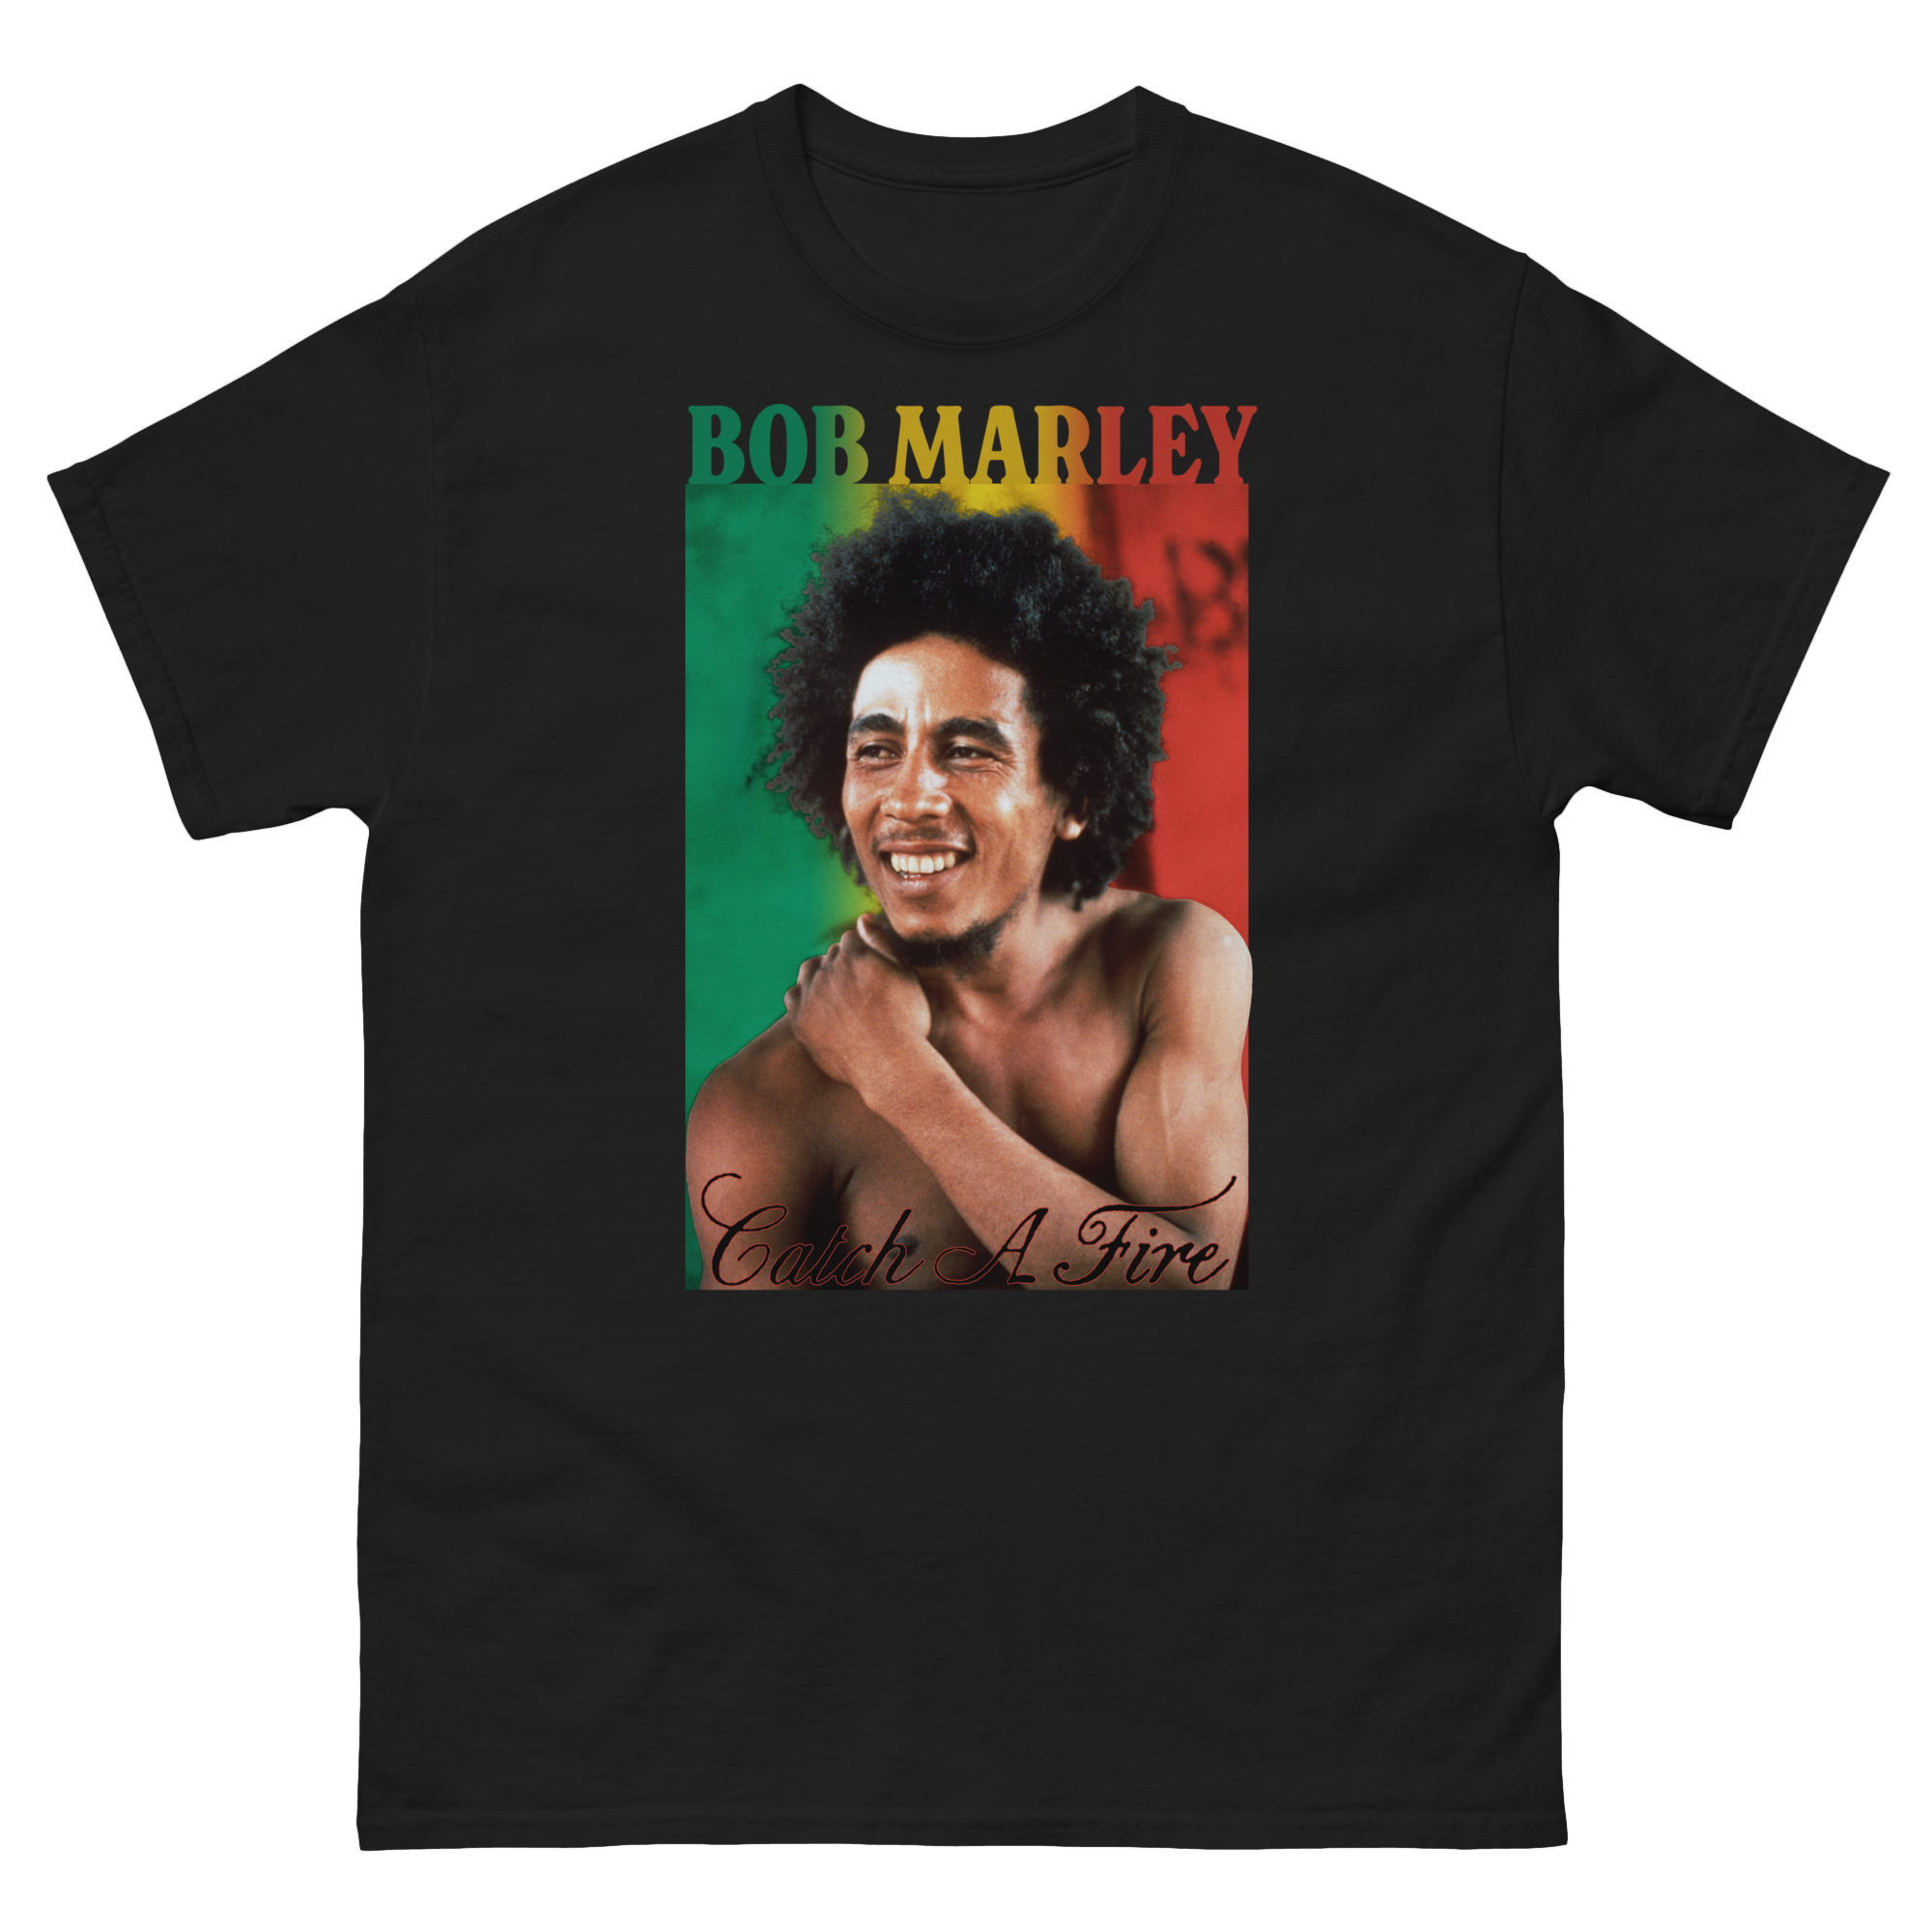 Bob Marley - Catch A Fire Black T-Shirt